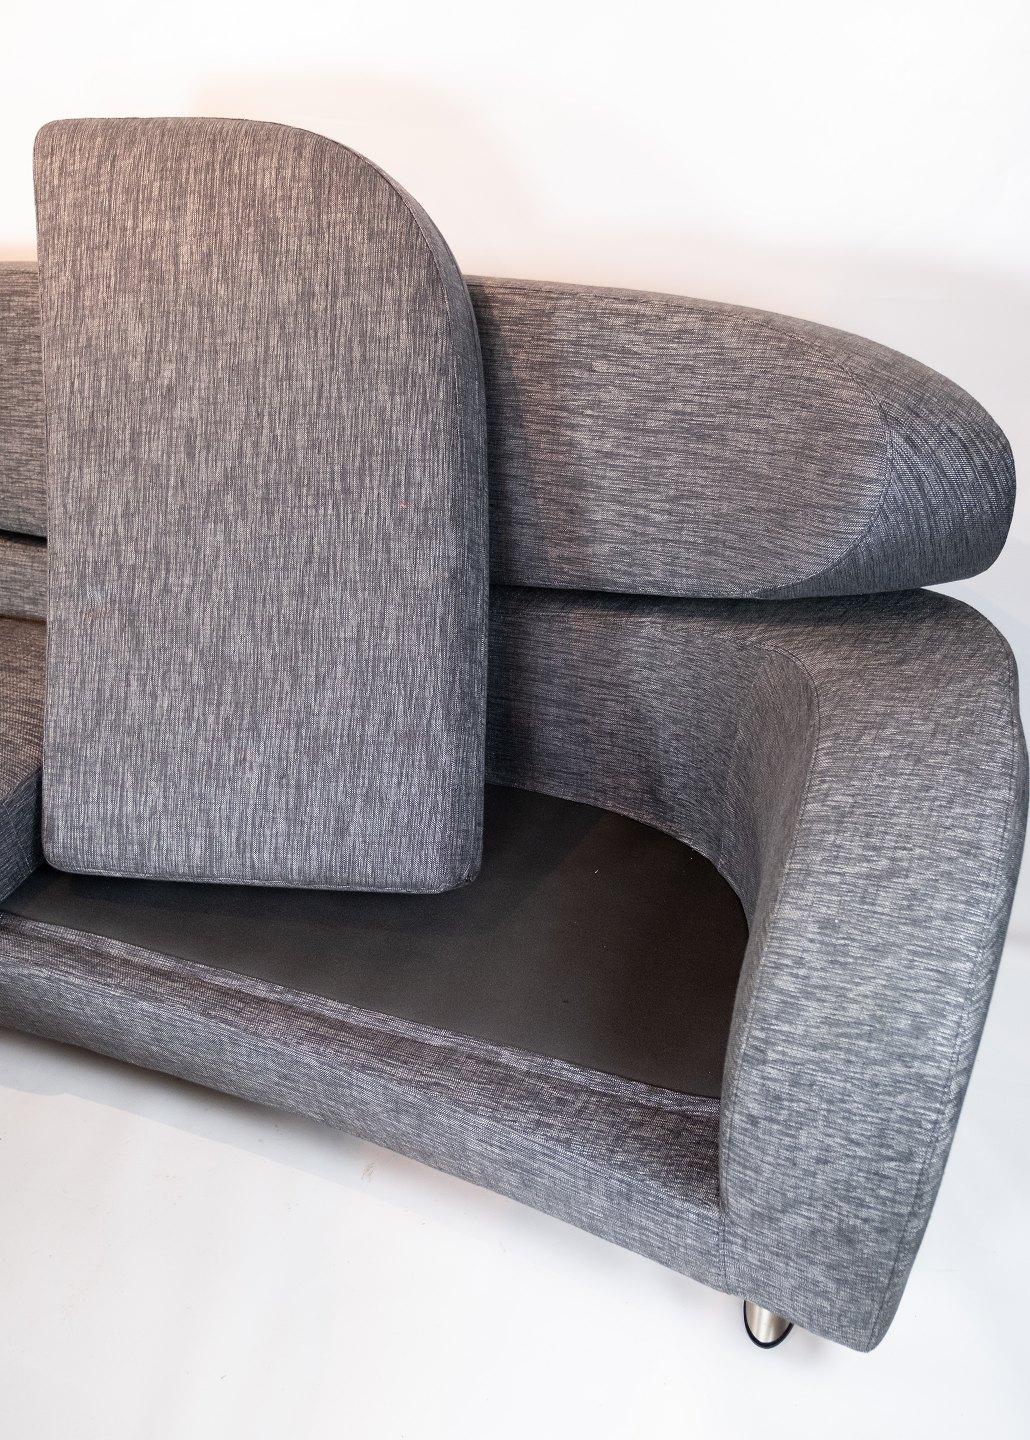 Scandinavian Modern Two-Seat Sofa of Grey Wool Fabric with Stool by the Norwegian Brand Brunstad